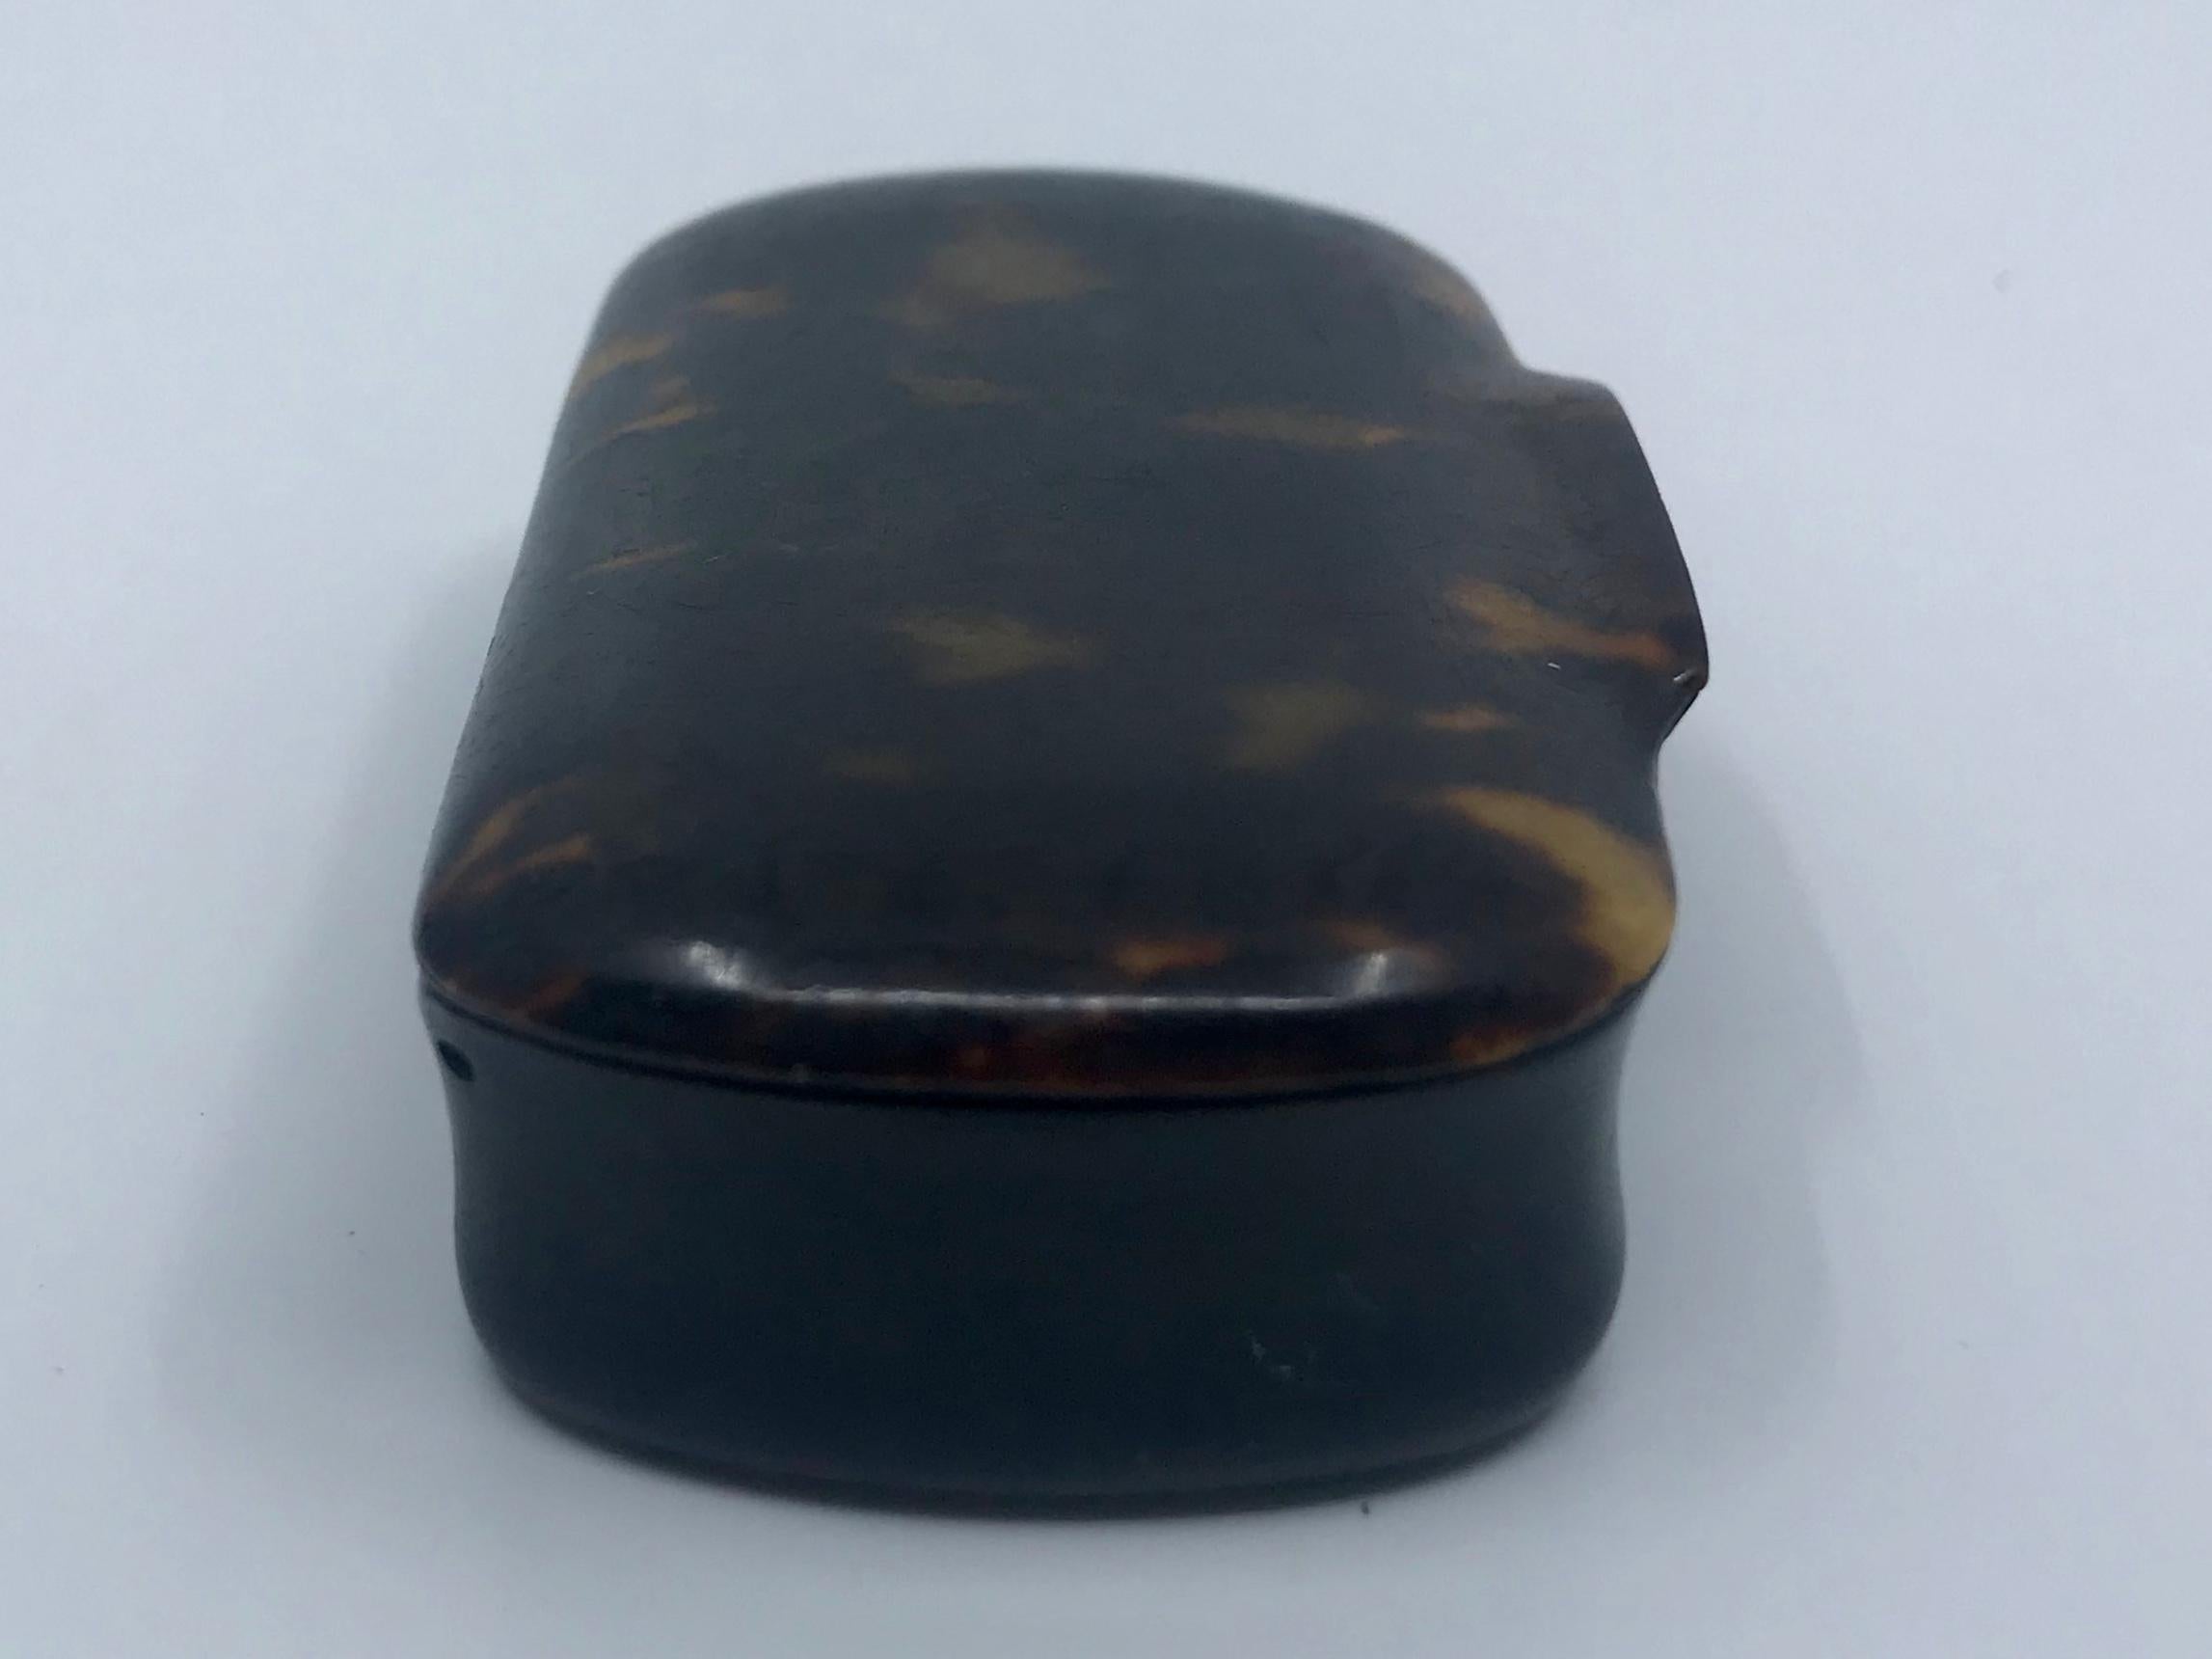 English tortoiseshell box. Ovoid shaped lidded snuffbox with integral handle of richly patterned tortoiseshell, England, circa 1900.
Dimensions: 3.5